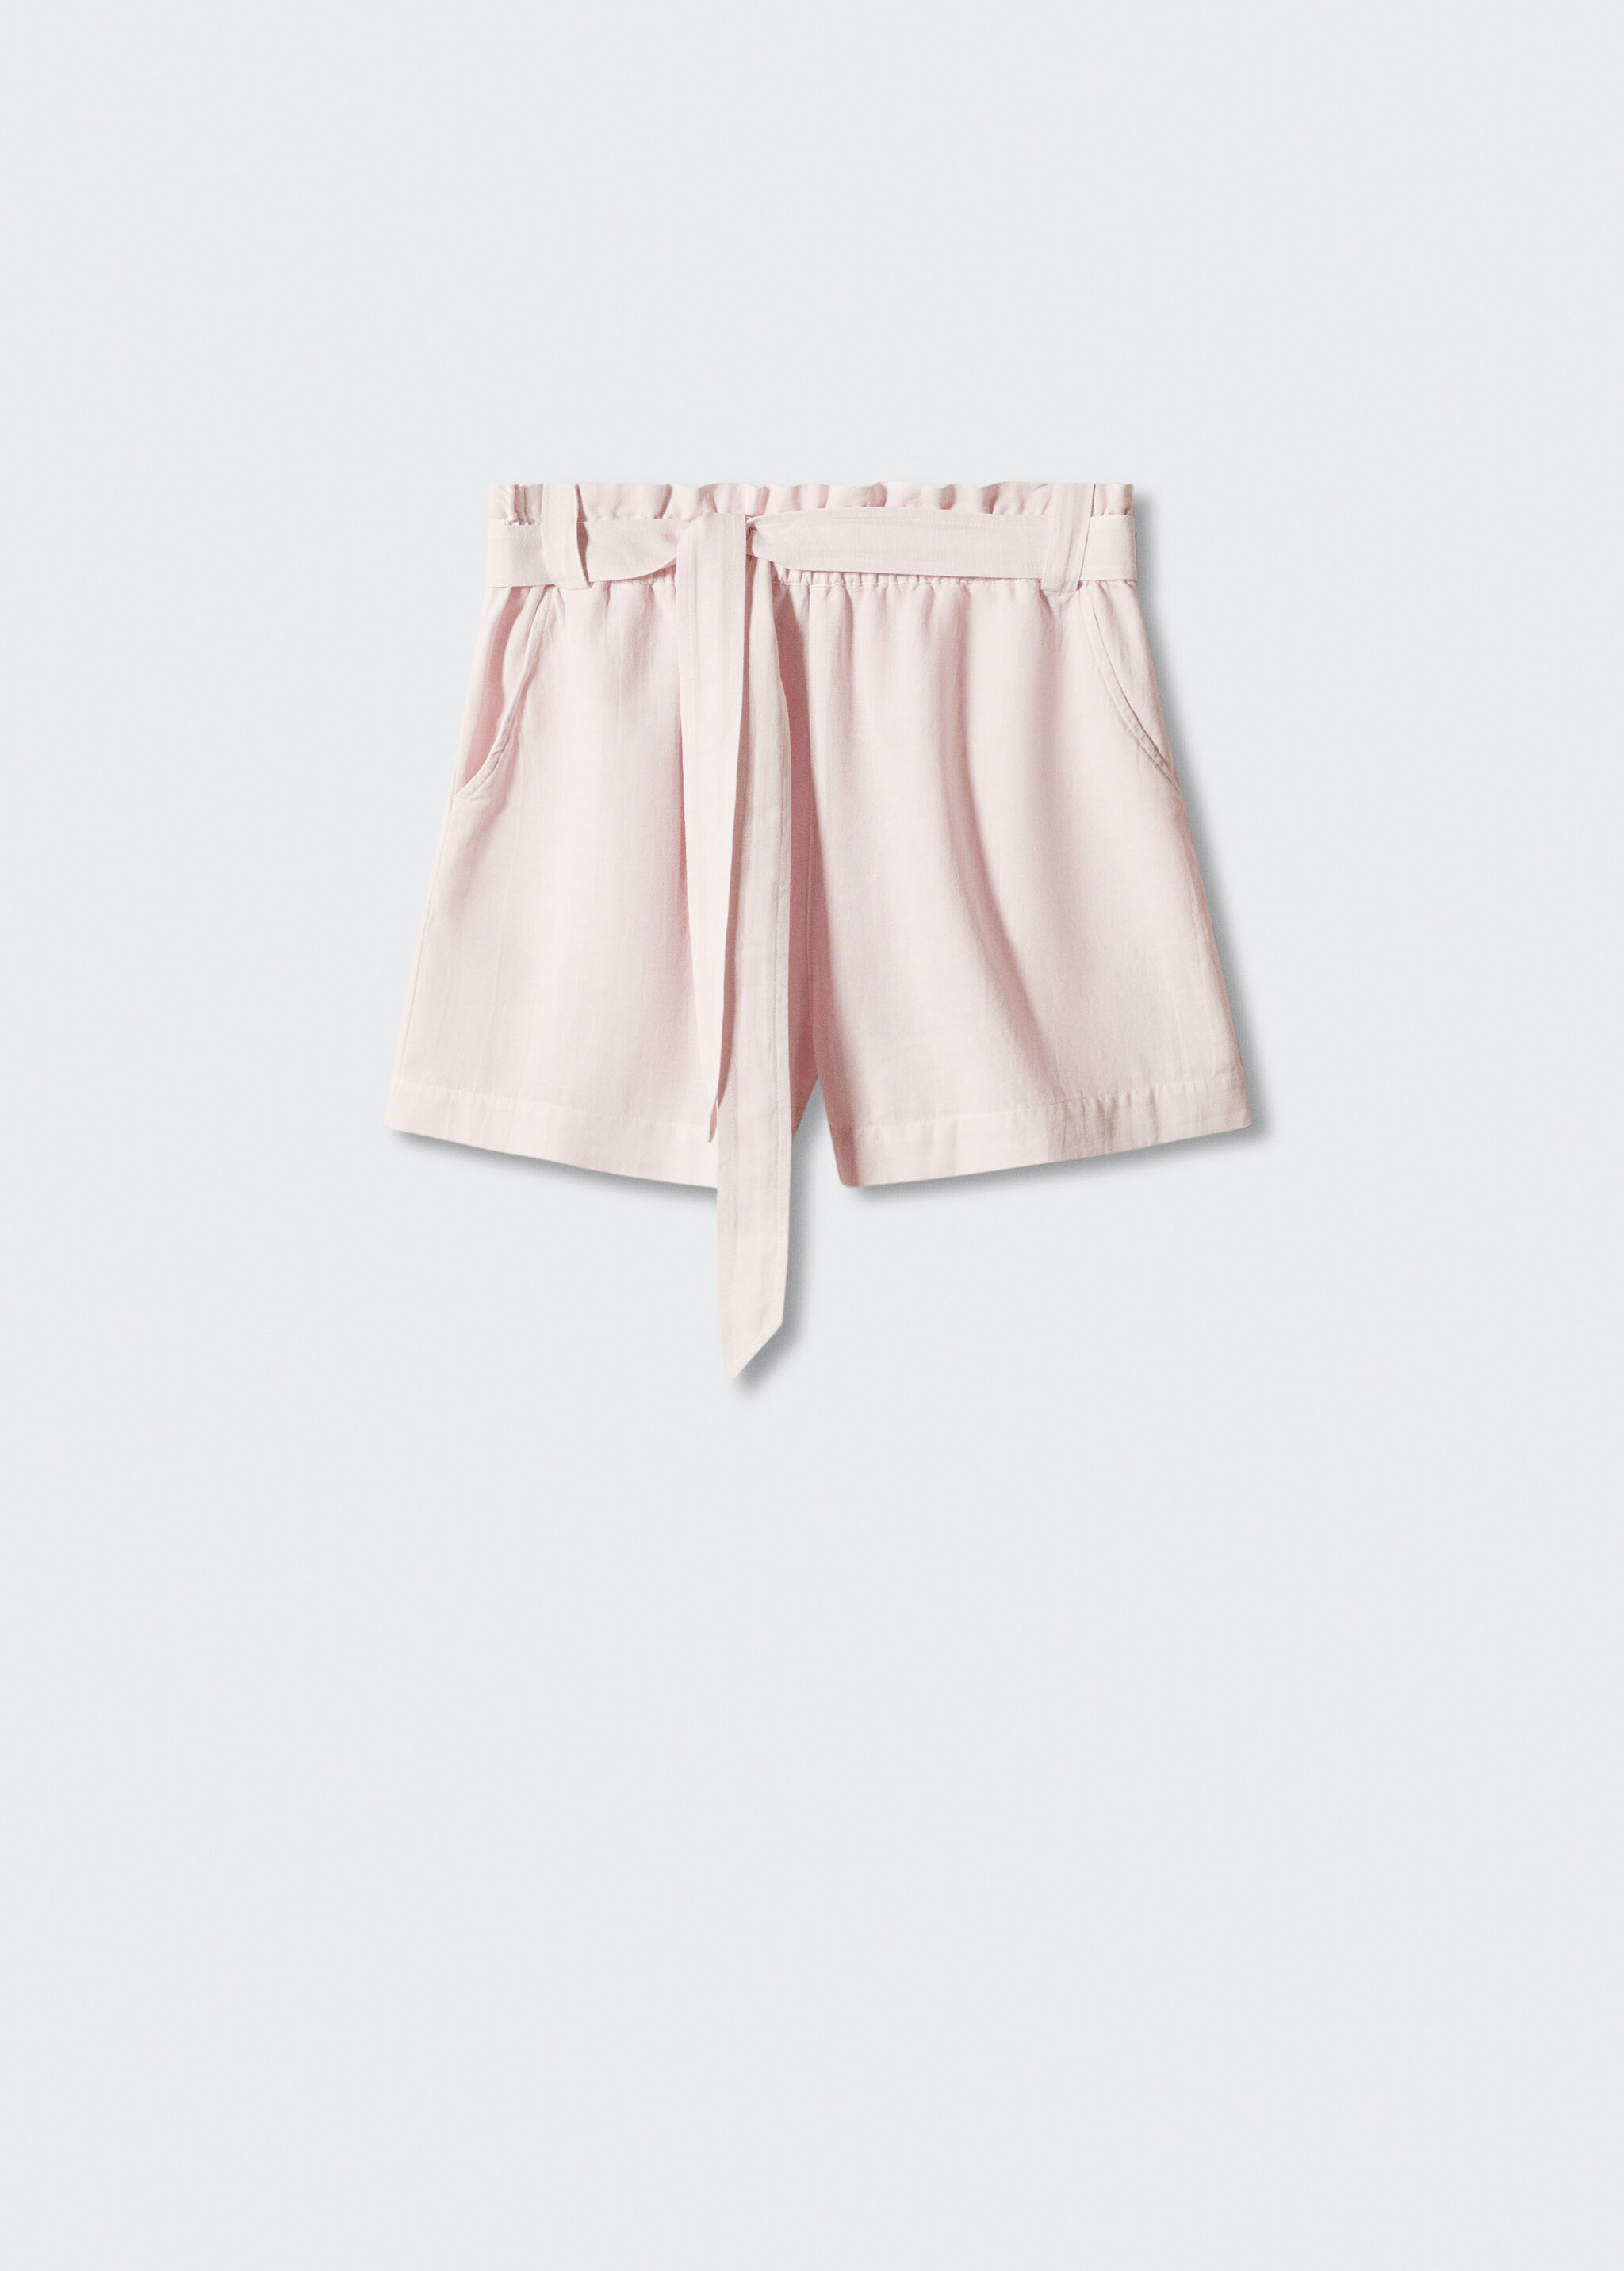 Cotton linen shorts - Artikl bez modela